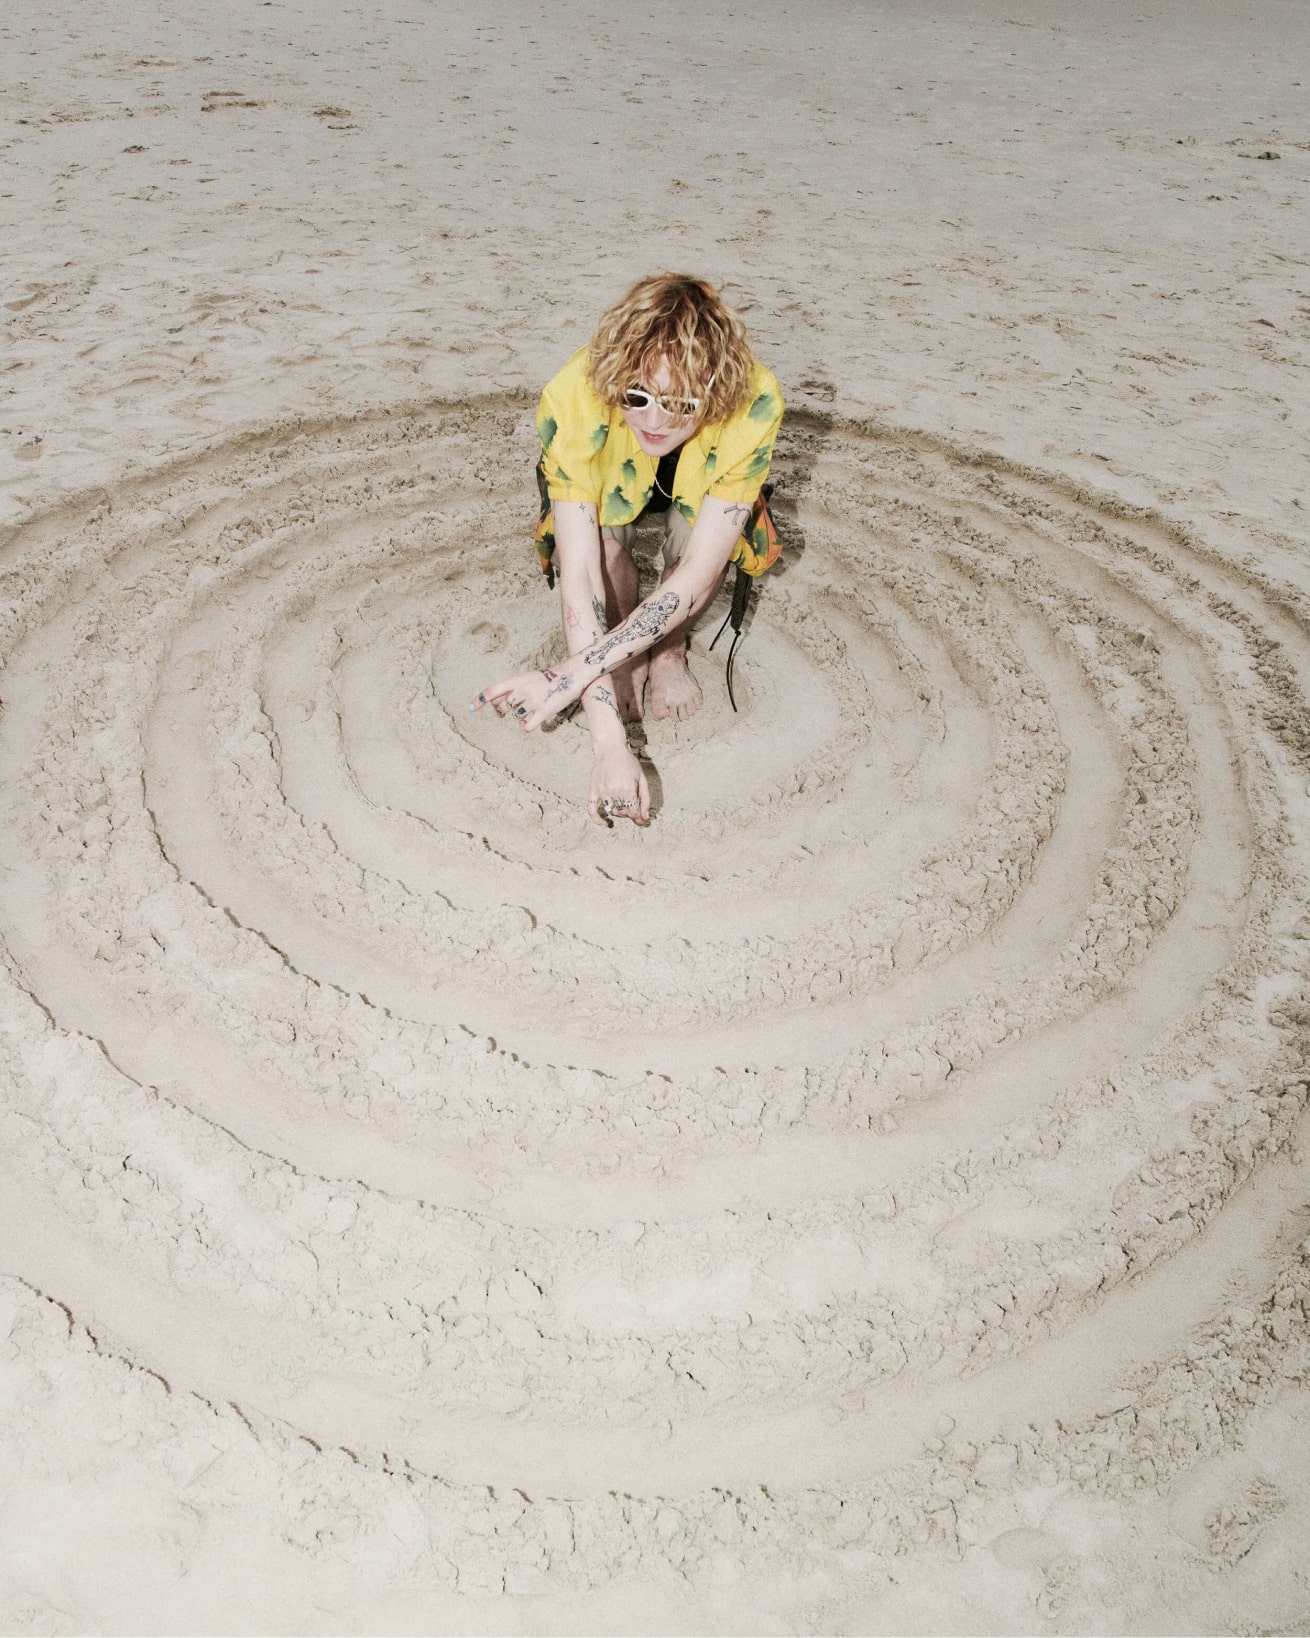 Man drawing big circles in the sand.